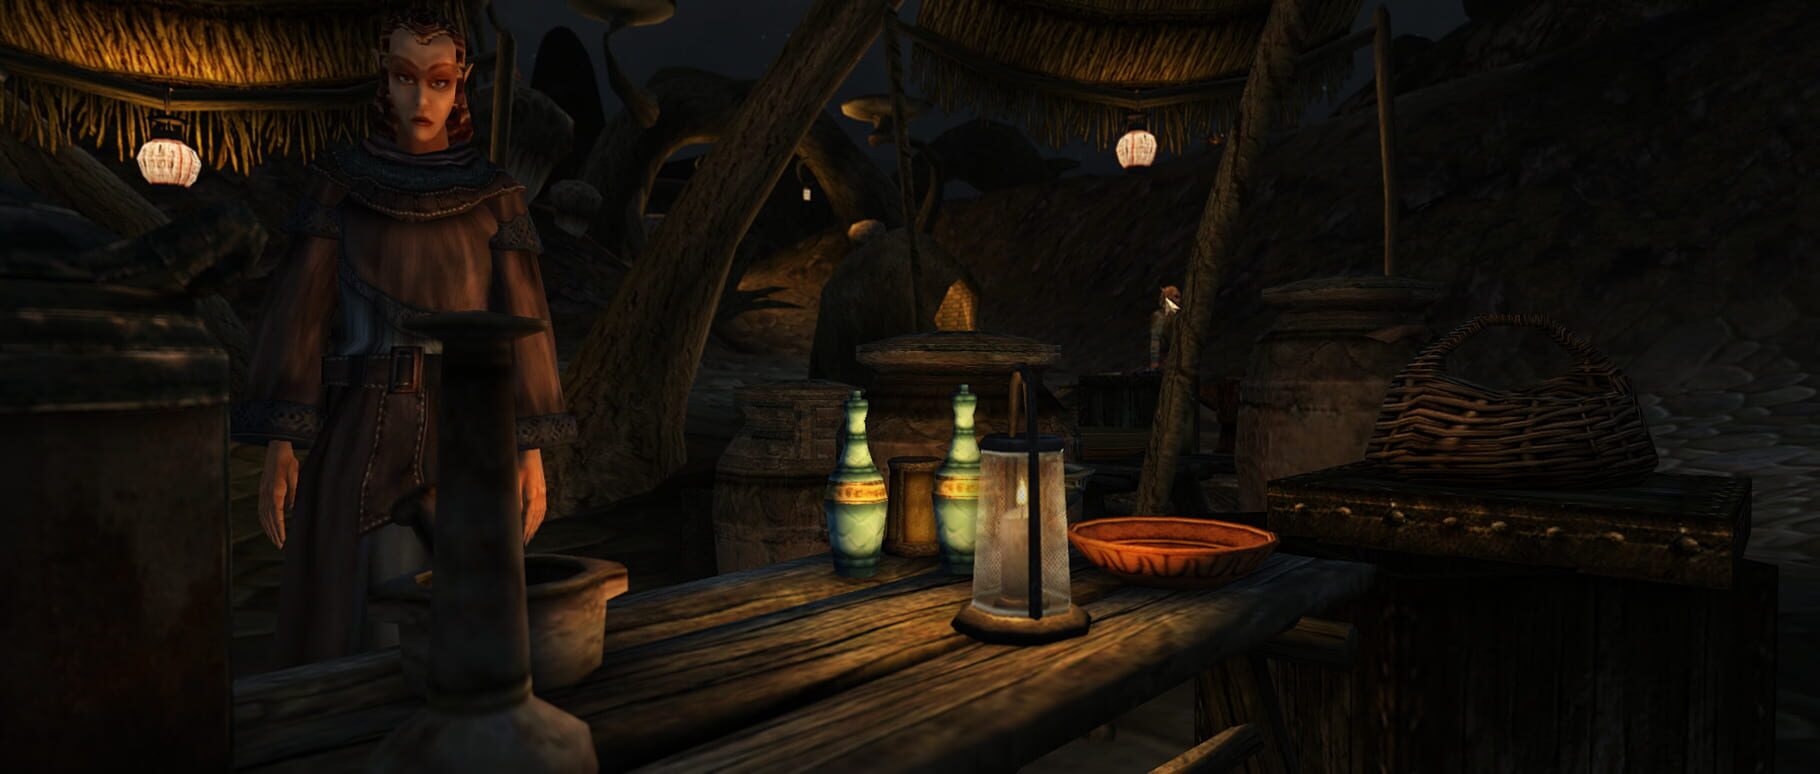 The Elder Scrolls III: Morrowind screenshots